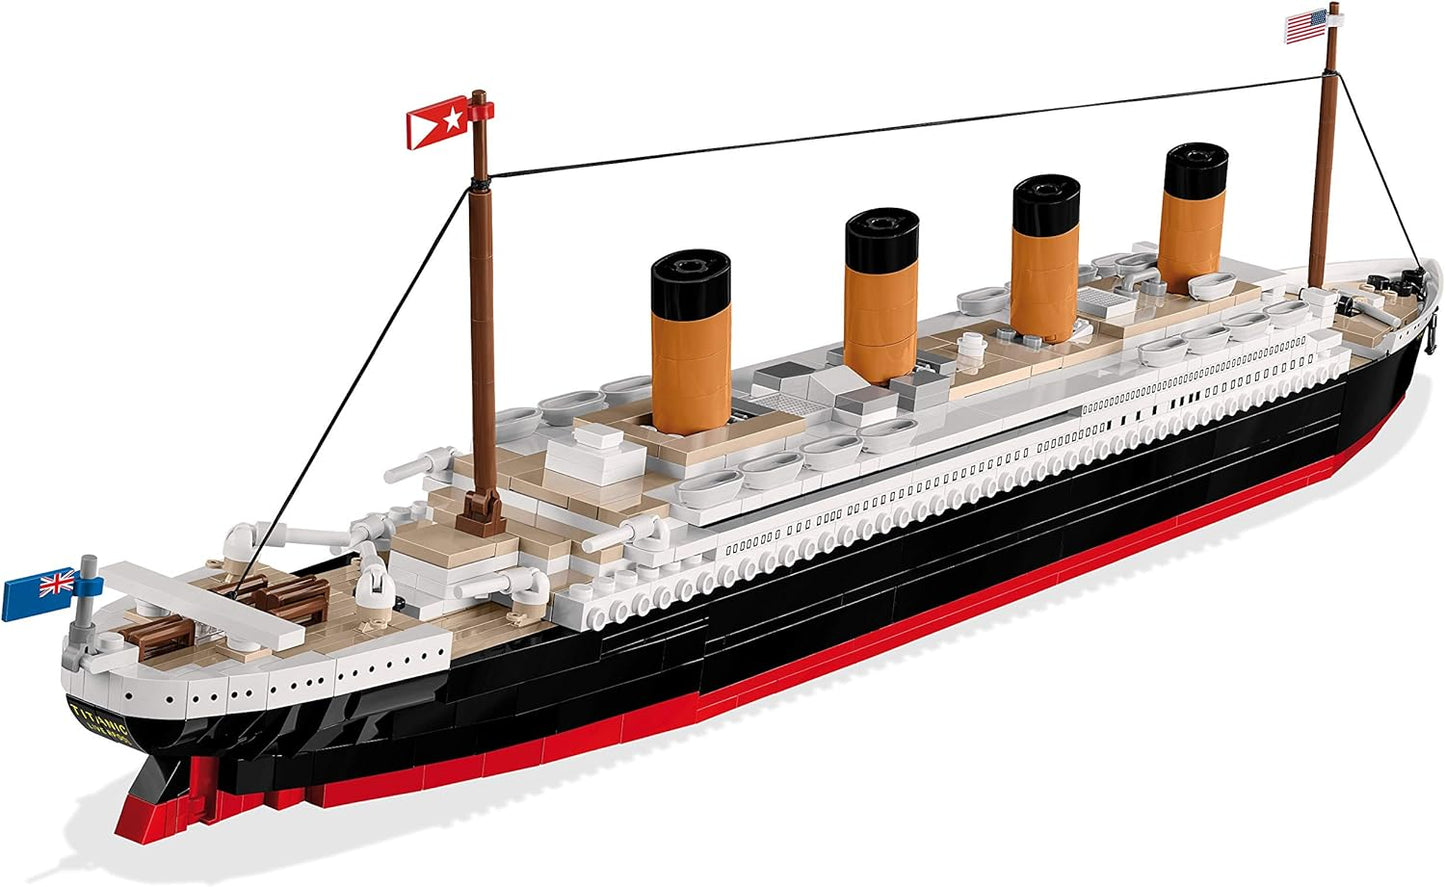 RMS TITANIC SMALL